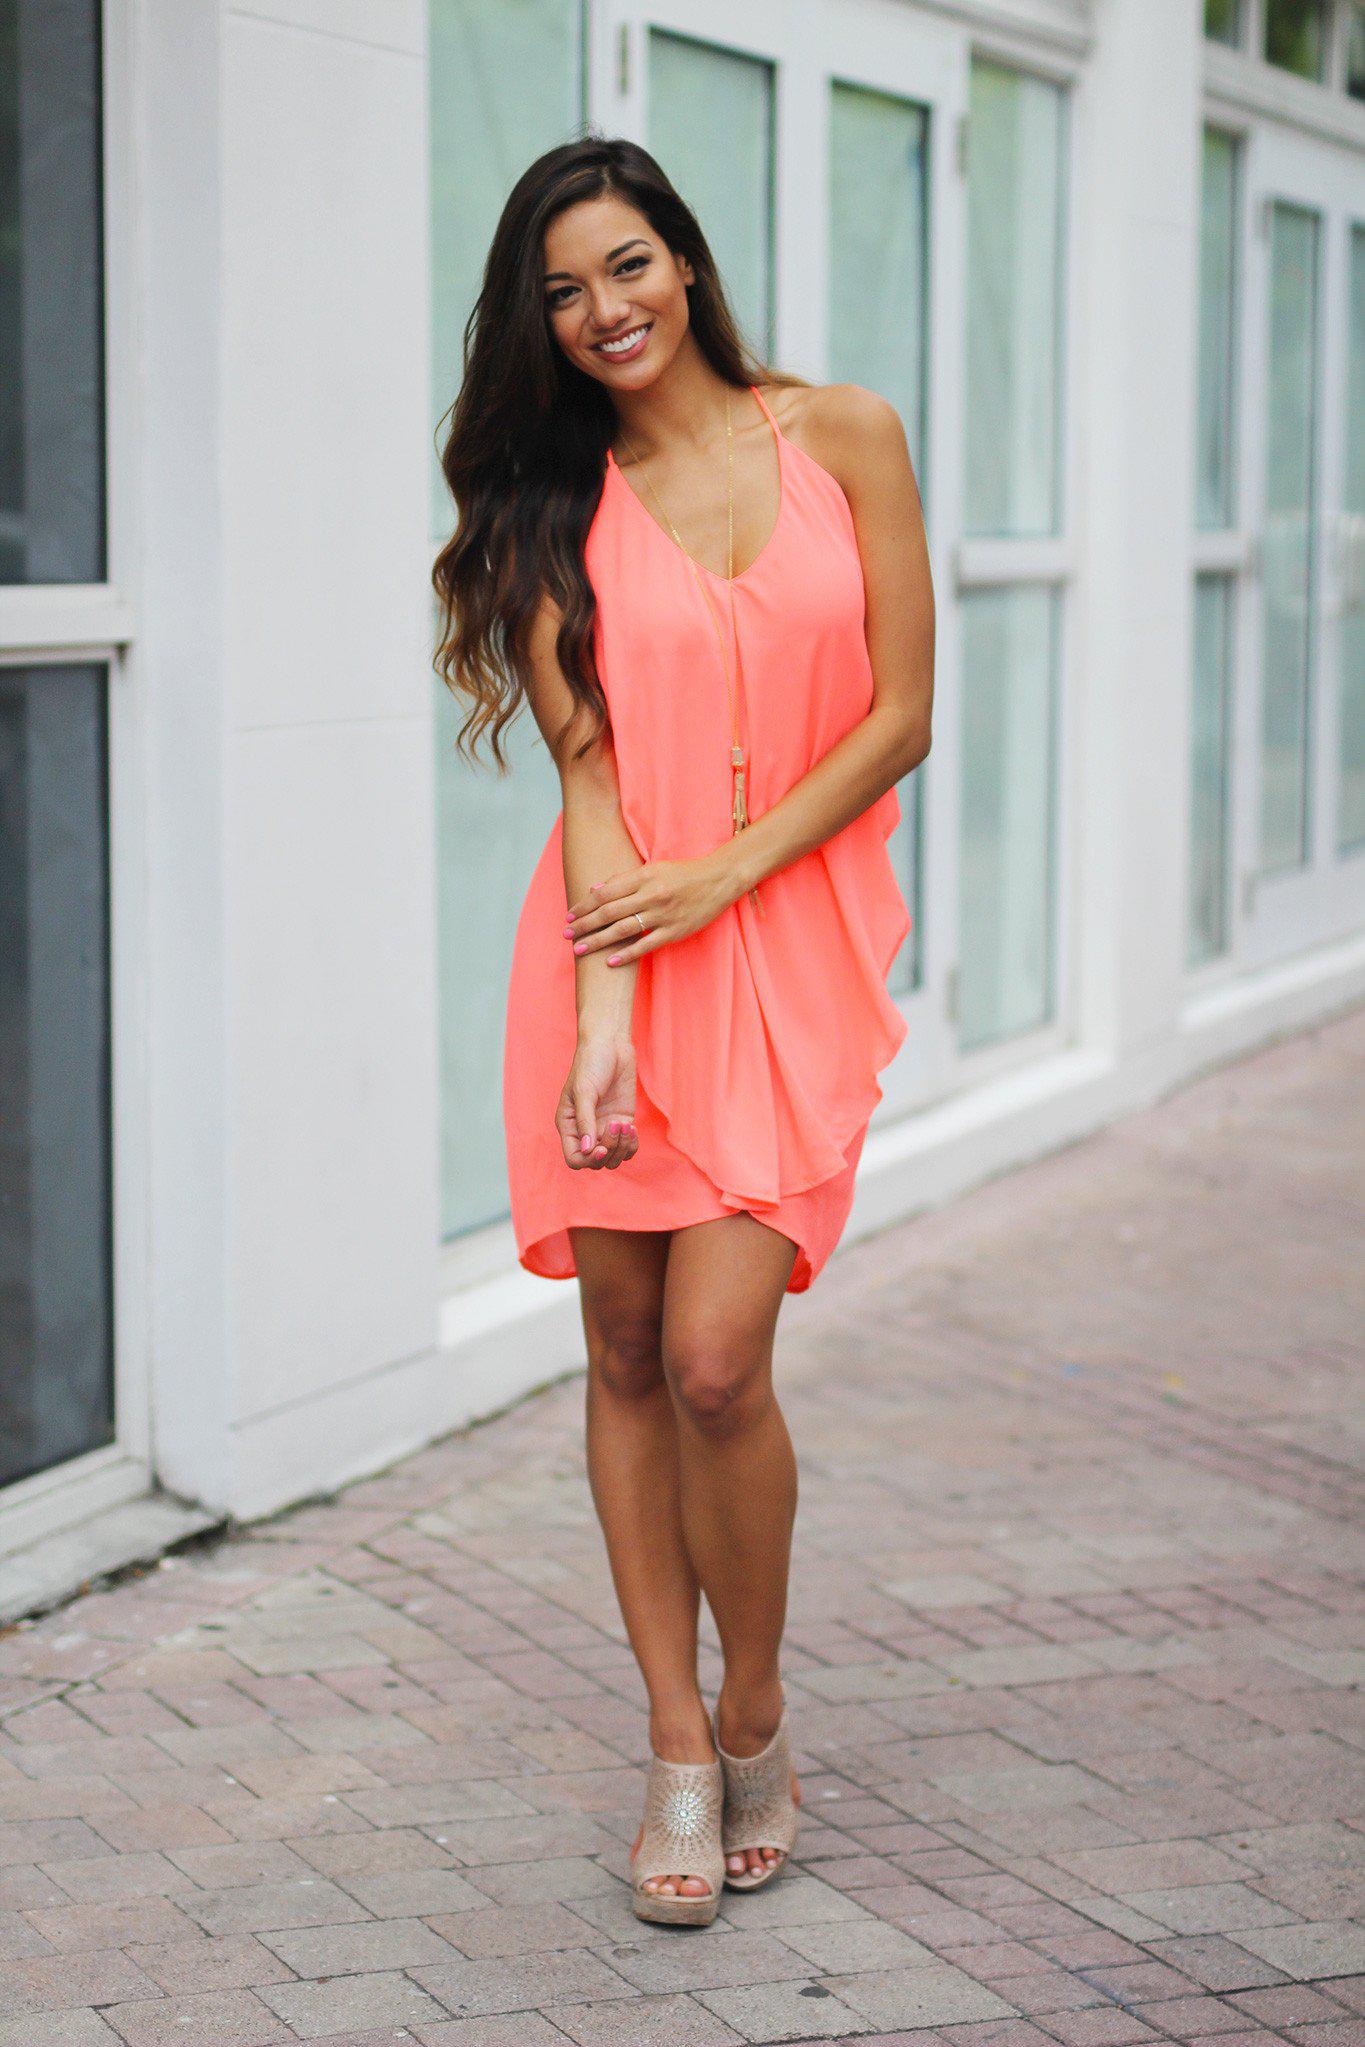 Layered Neon Coral Short Dress